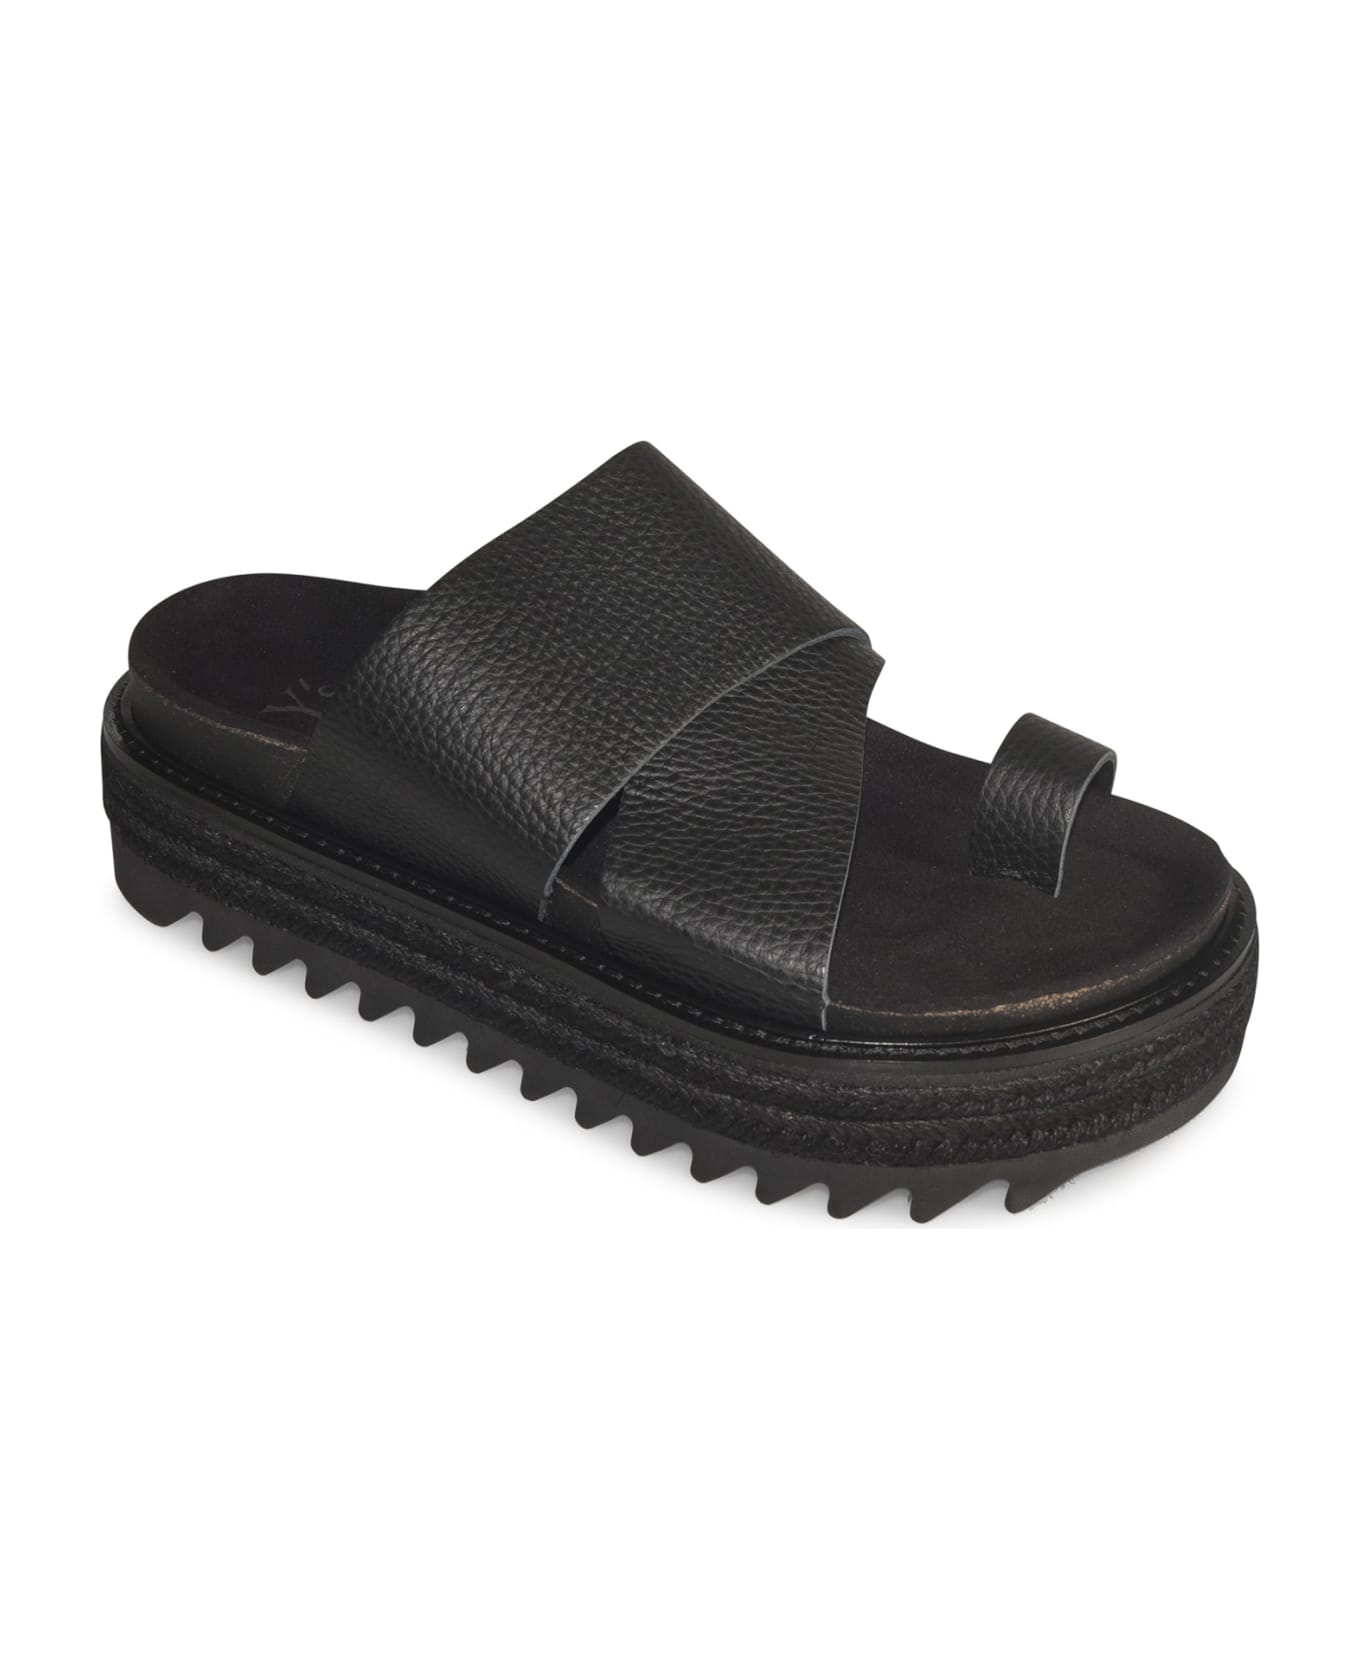 Yohji Yamamoto Pointed Woven Sole Sandals - Black